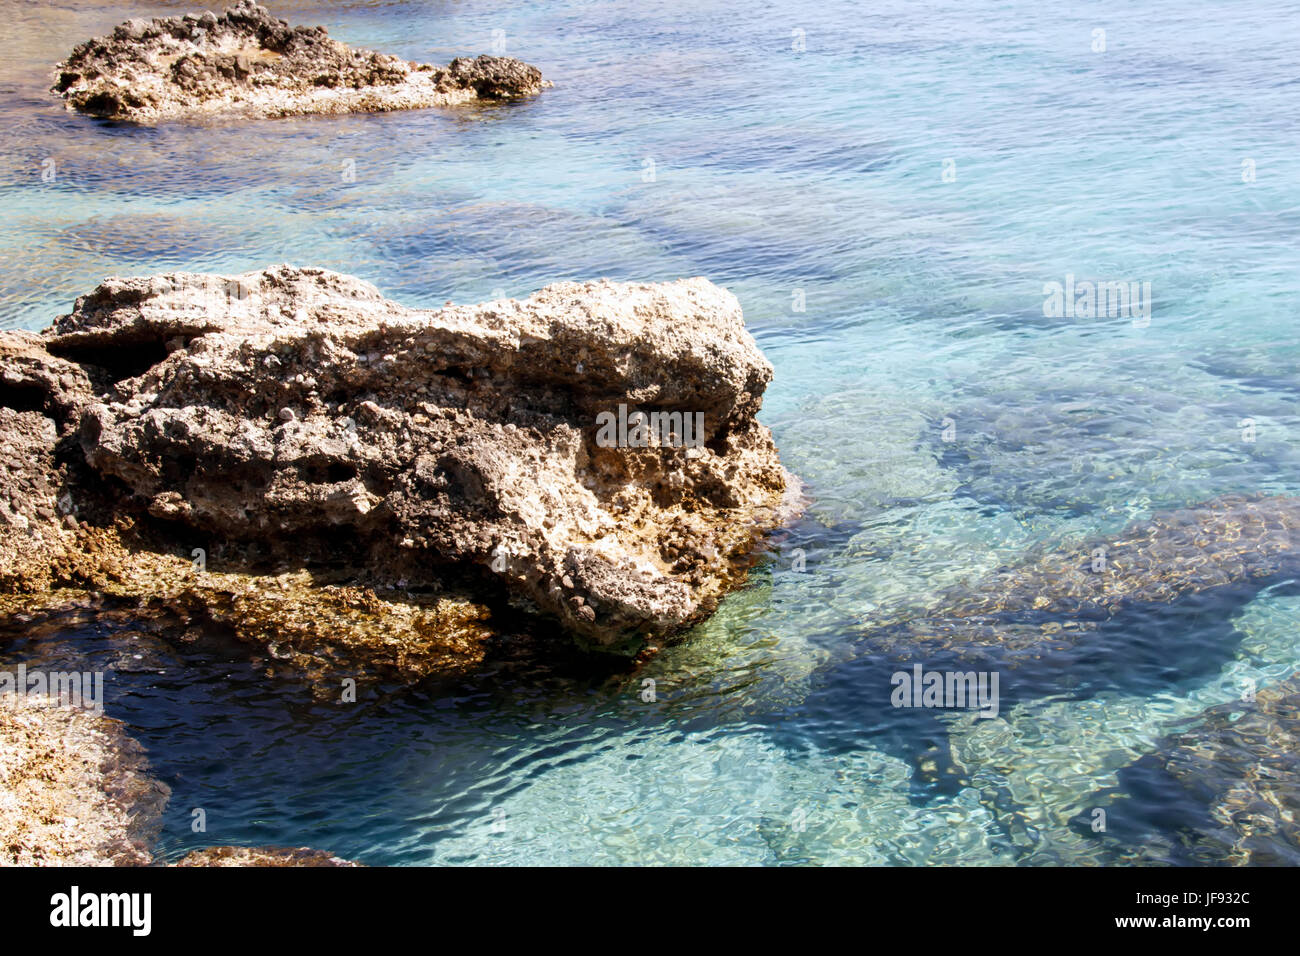 Turquoise waters of Mediterranean sea Stock Photo